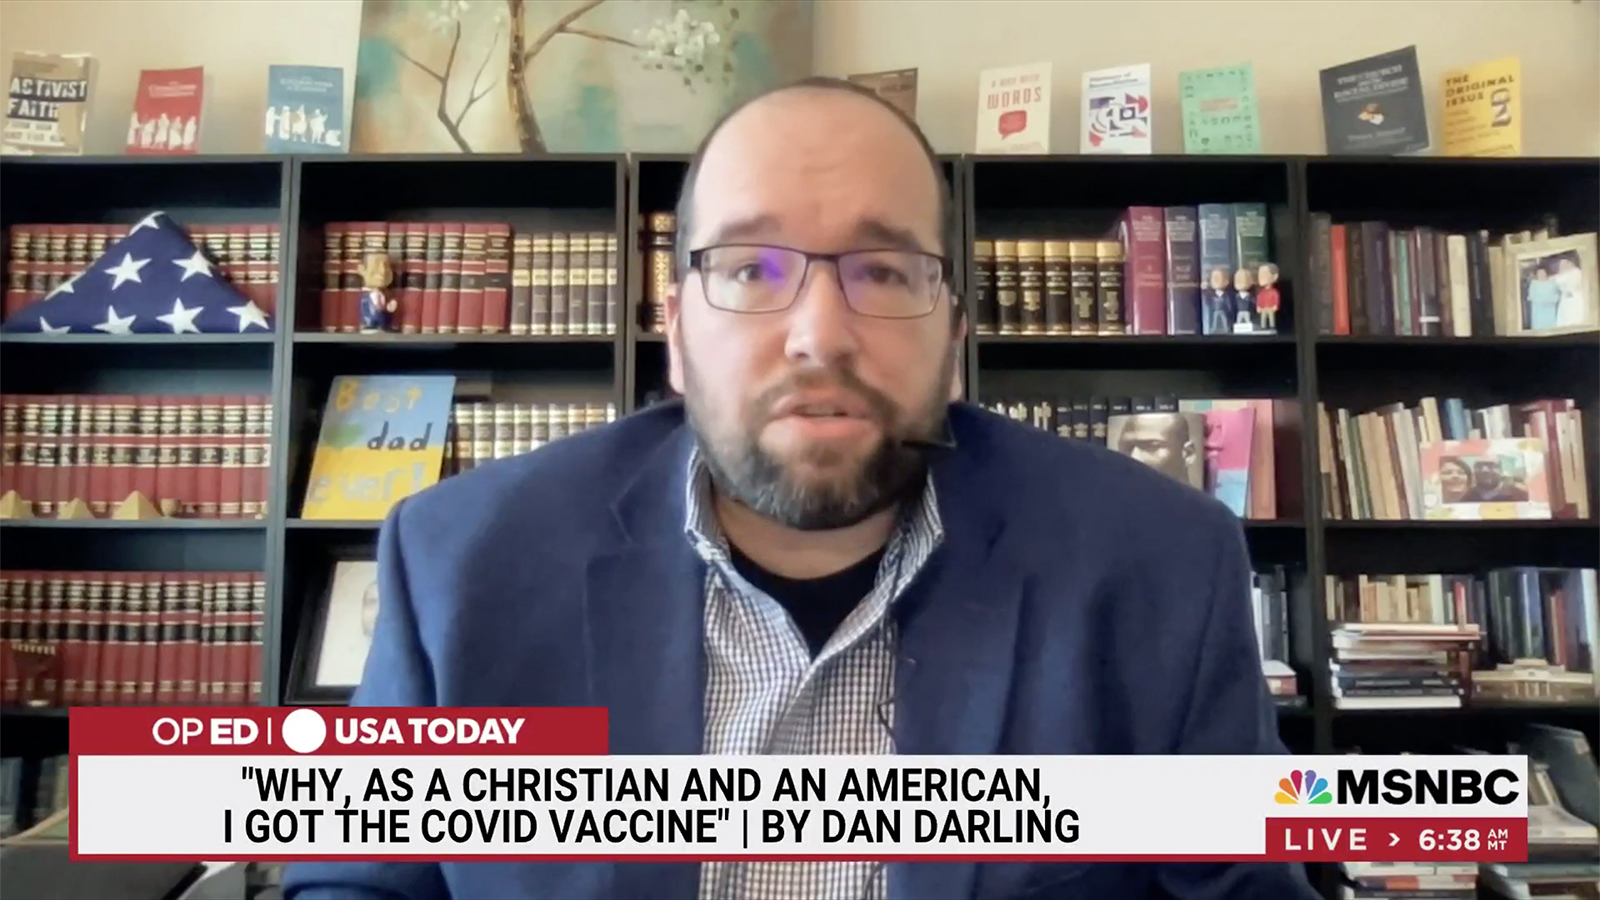 Daniel Darling appears on the MSNBC show, “Morning Joe” on Aug. 2, 2021. Video screengrab